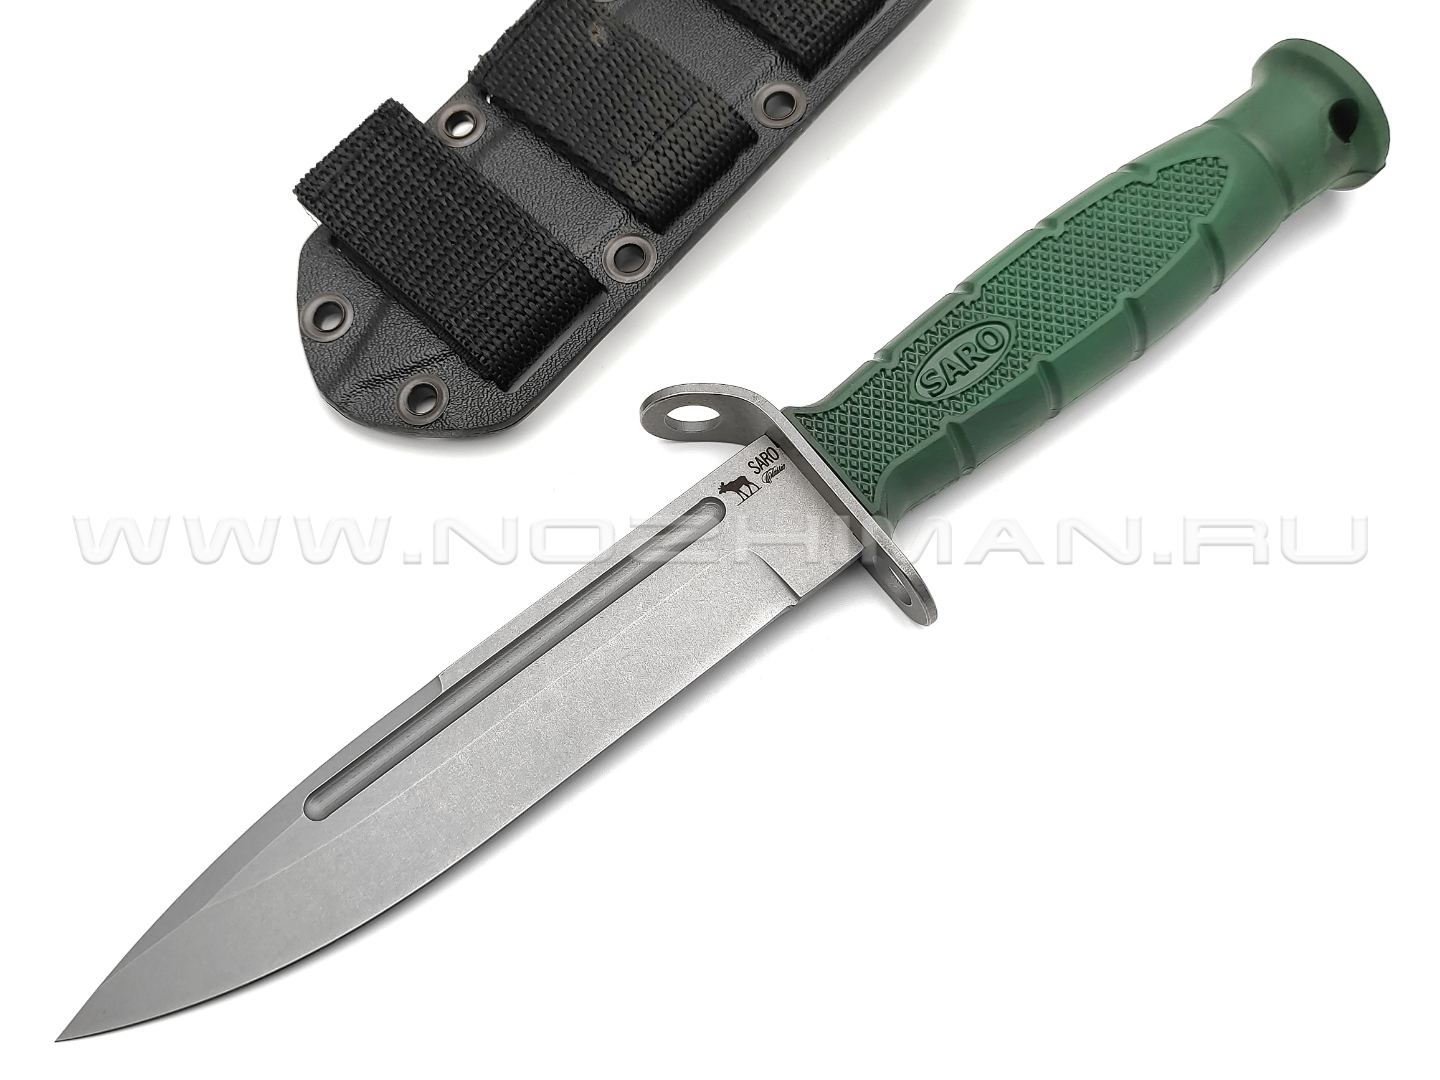 Saro нож 6Х9С сталь Aus-6, рукоять зеленая резина